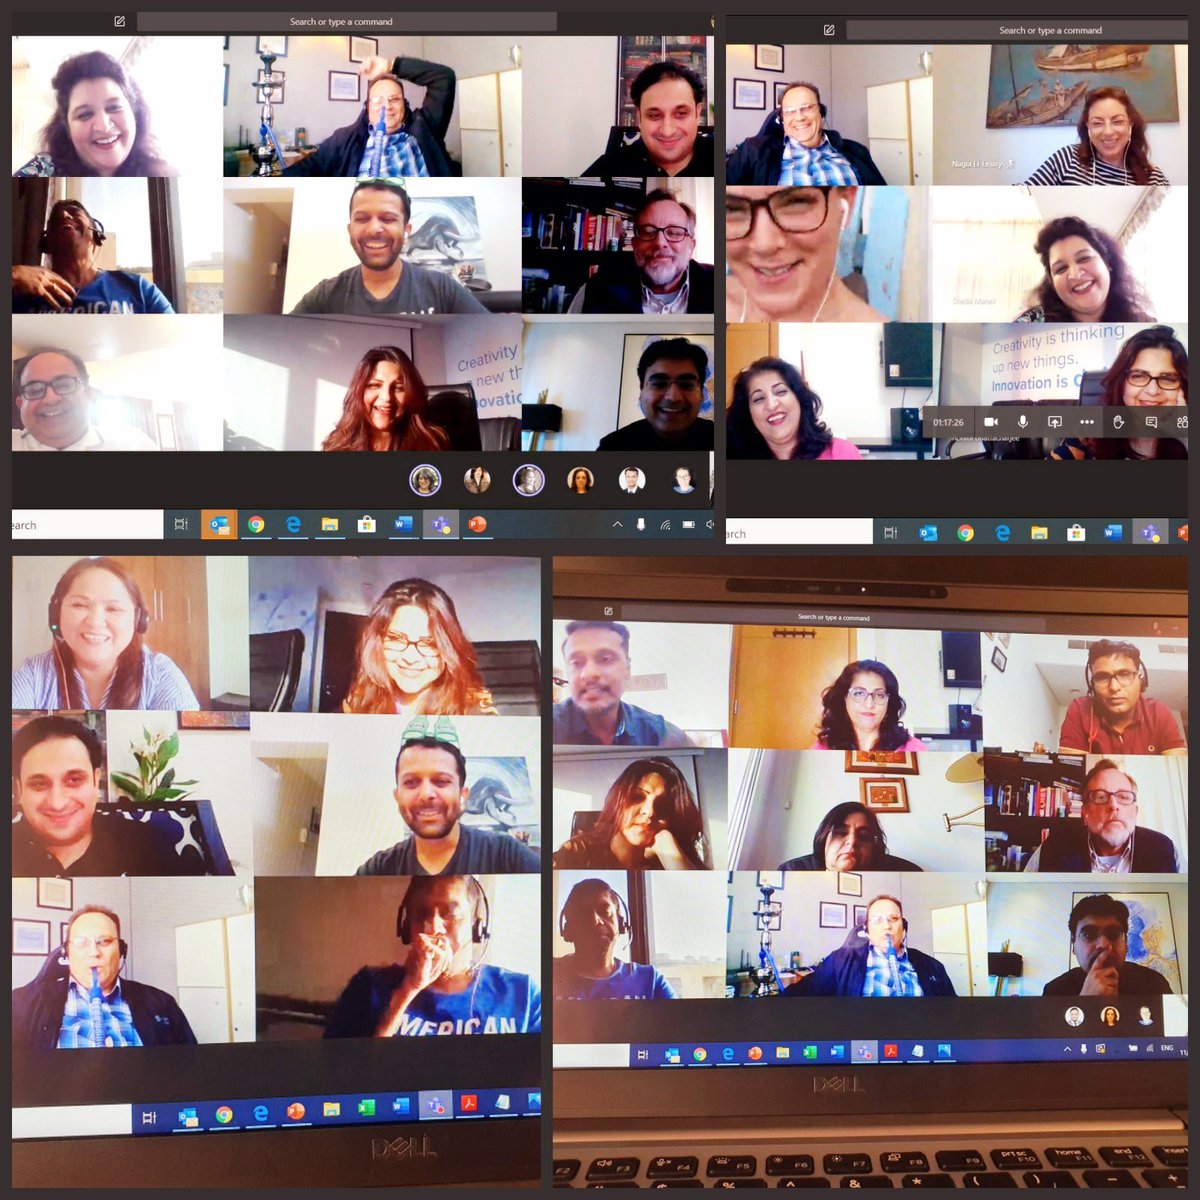 The awesome @IDCMEA leadership team virtual get together!! @IDC #teamwork #coffeechat #collaborativework #teamsuccess @JyotiIDC @ranjitrajan1 @RonitaDXB @HamzaNaqshbandi @BhebanKewalram @alombaard_idc @MarkWalker36 @ncizmeci @IDC_SSA @IDC_Turkiye